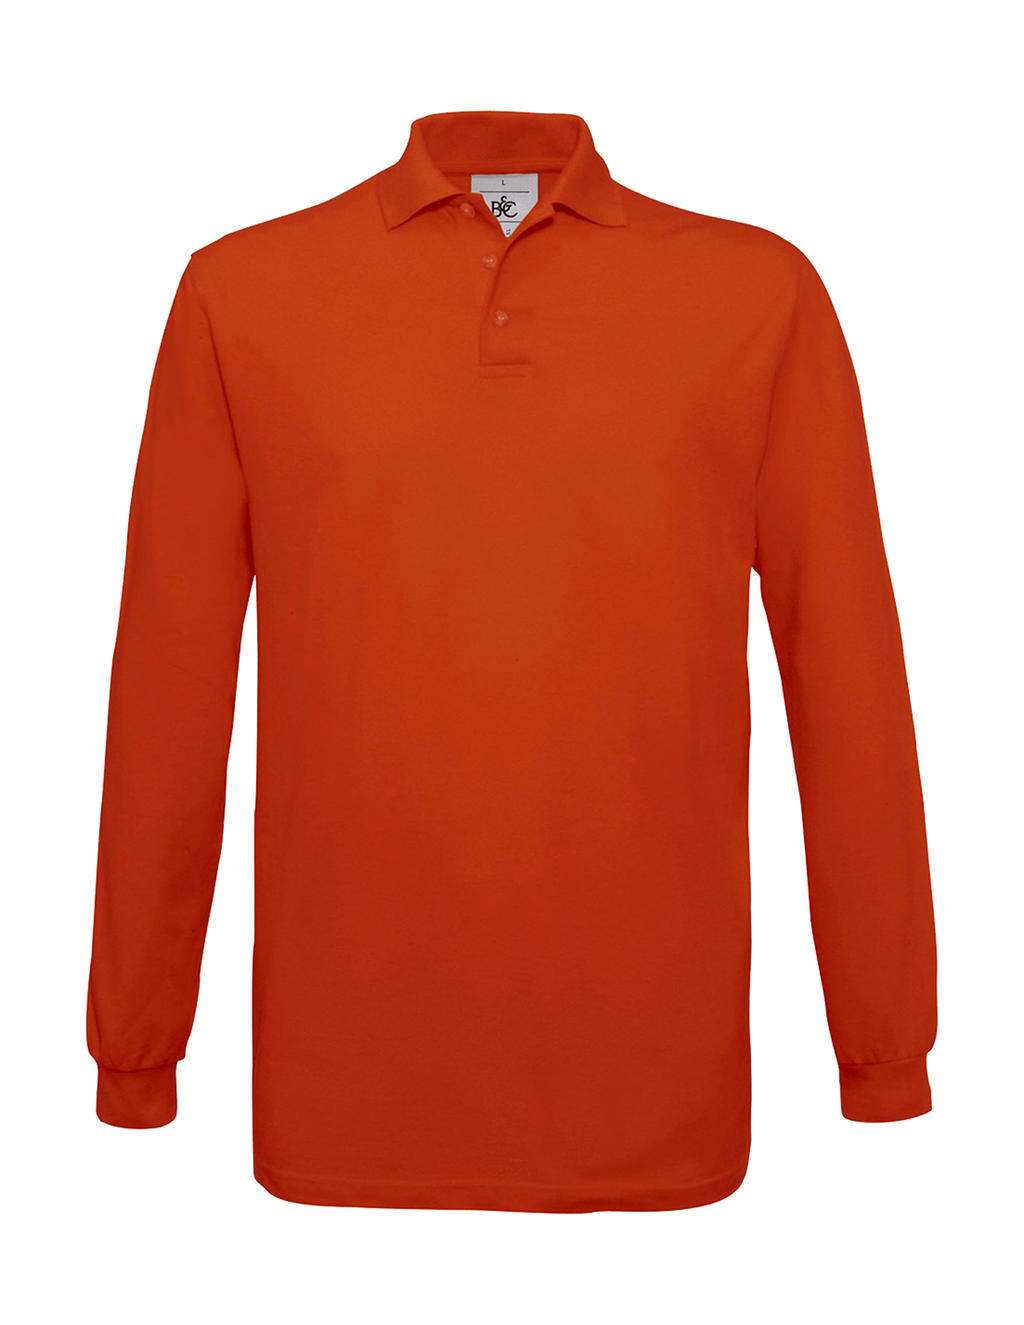 Pánské polo tričko B&C Safran s dlouhým rukávem - oranžové, XL